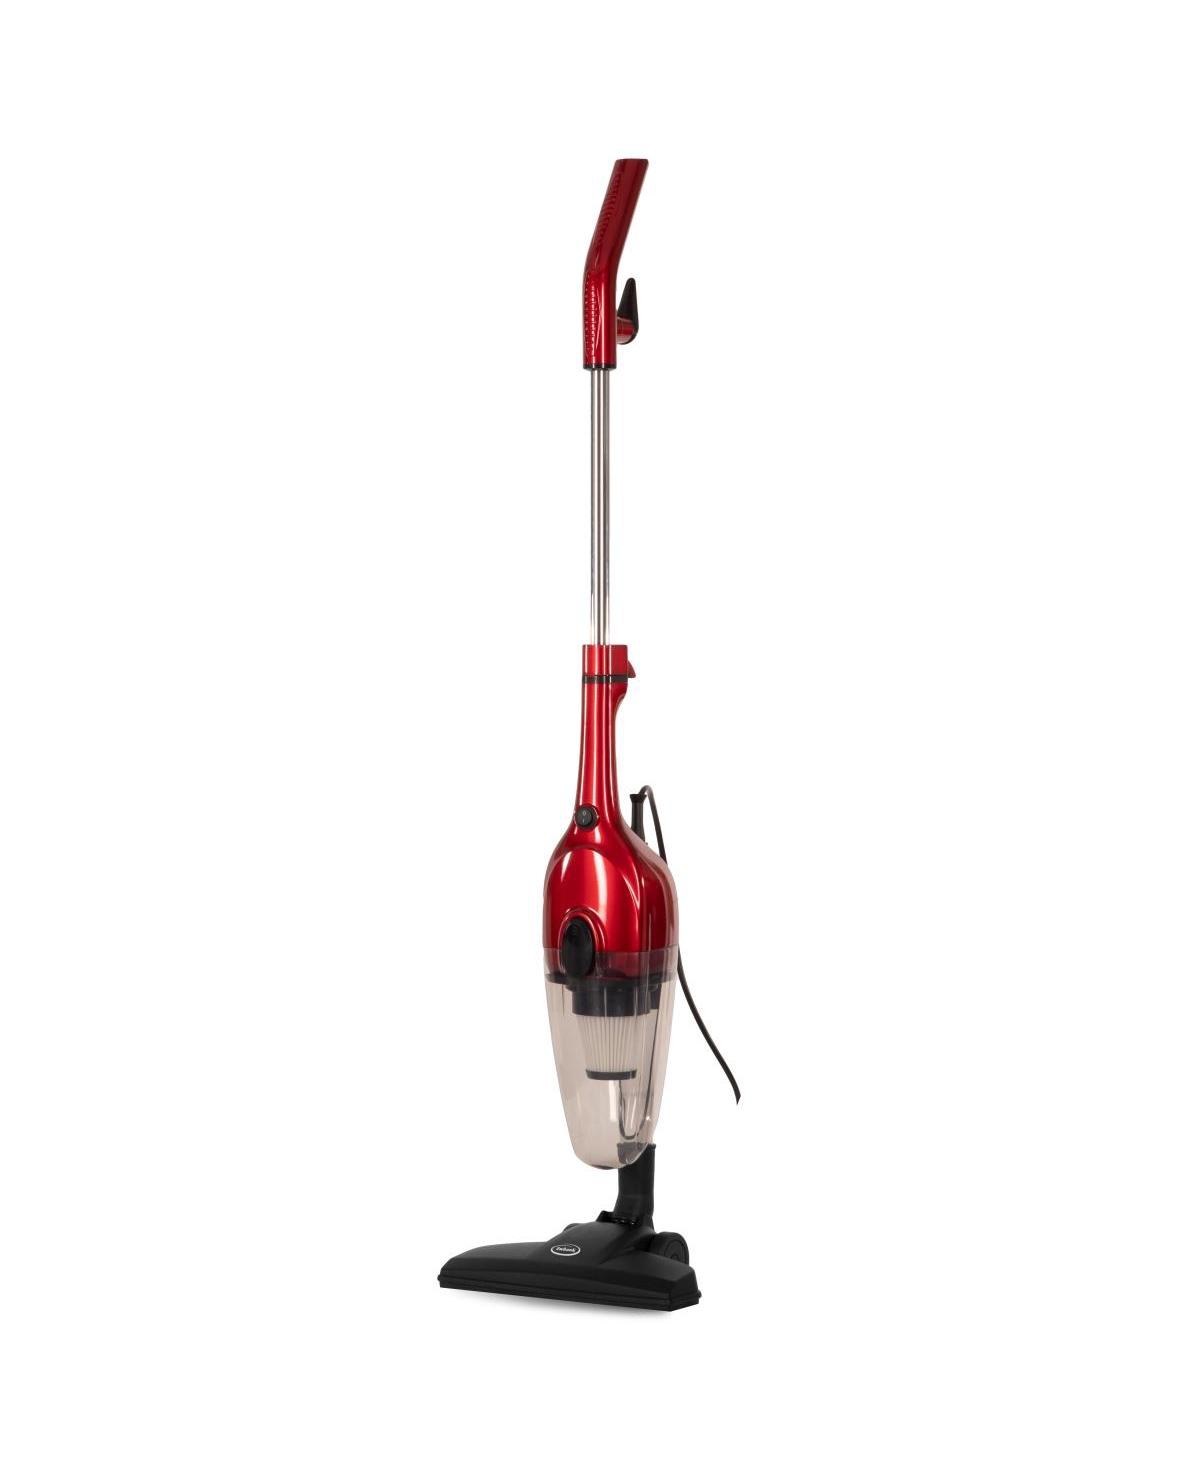 VC600 Chilli Tempest Vacuum Cleaner - Red